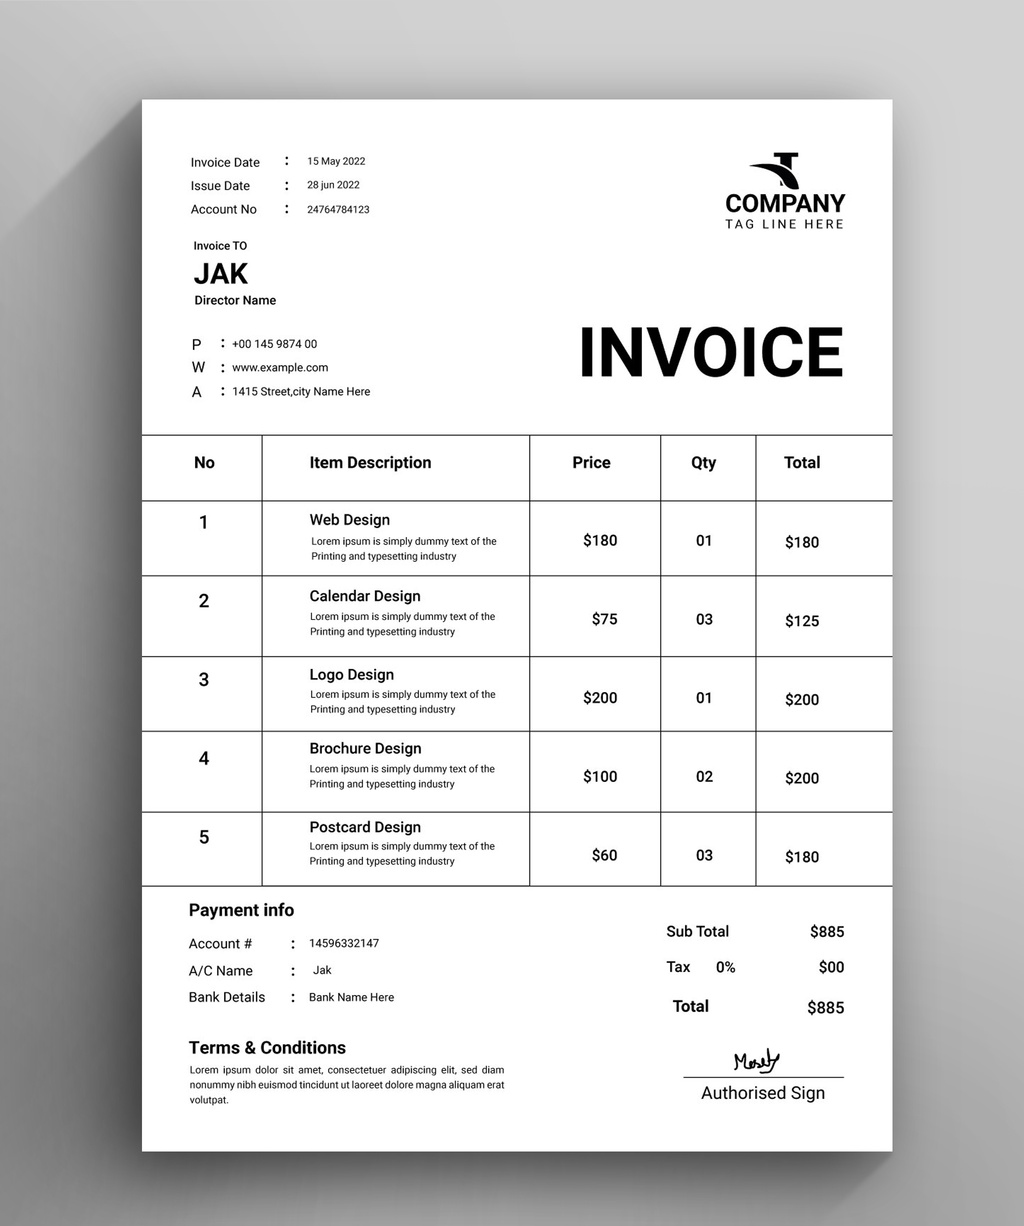 Invoice Design Layout (AI Format)